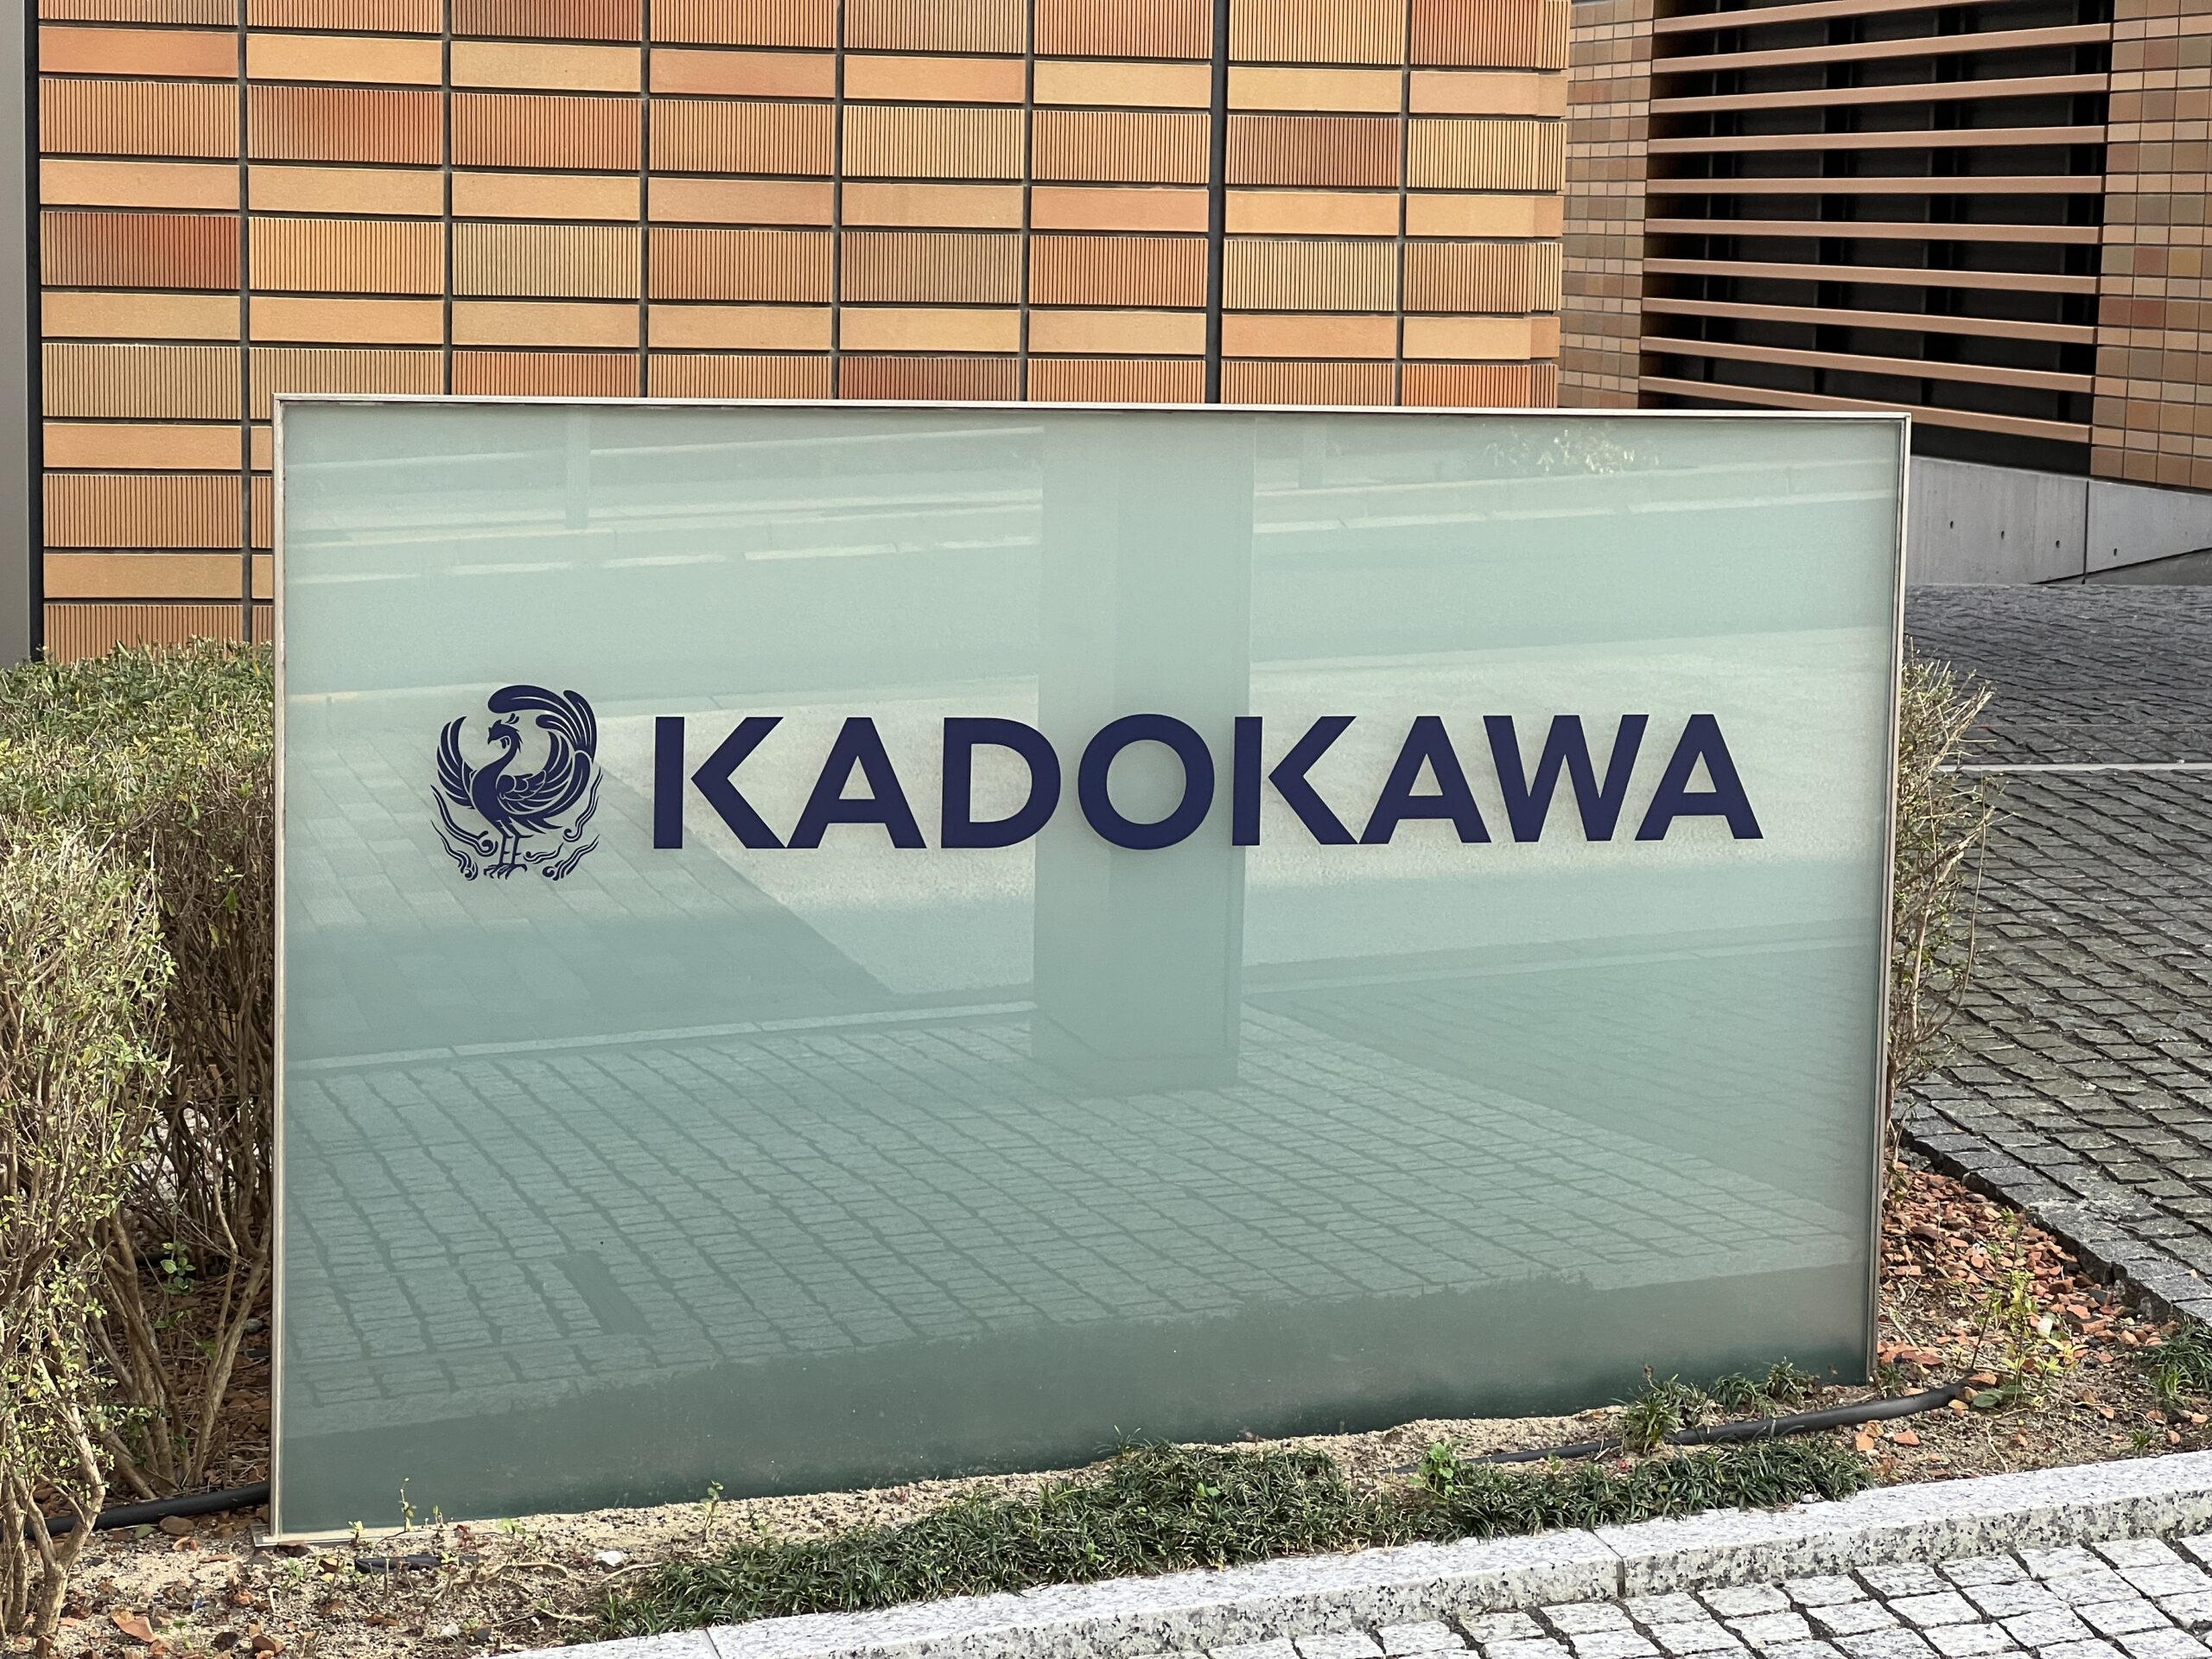 KADOKAWAの社標の写真